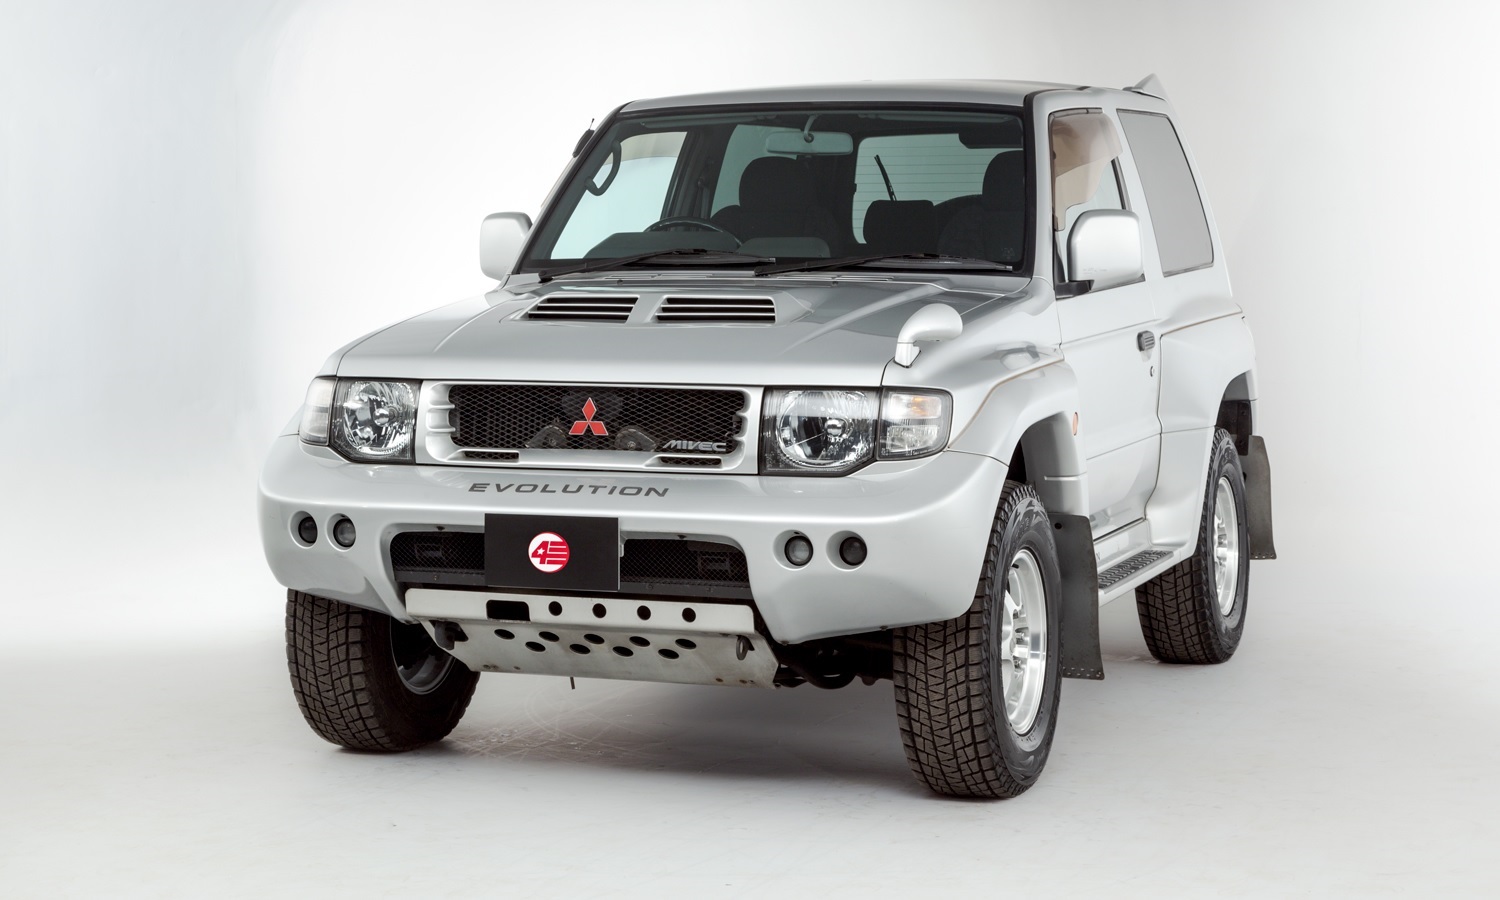 Mitsubishi Pajero Evolution White with Trailer and Mitsubishi Lancer Evolution 